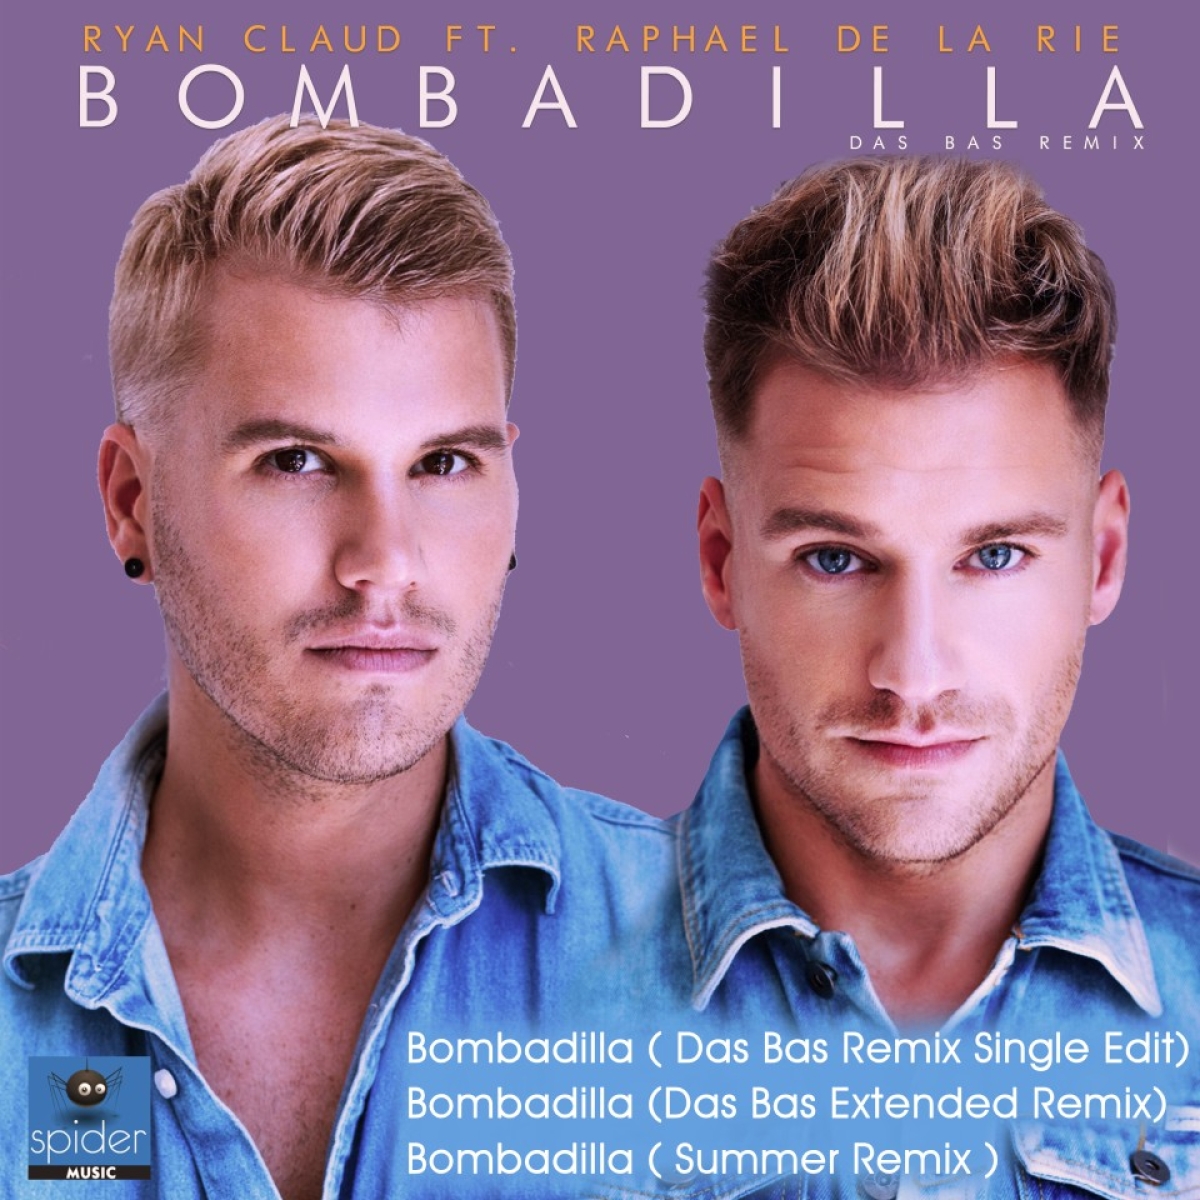 RYAN CLAUD FT RAPHAEL DE LA RIE – EP remix “Bombadilla” από την Spider Music